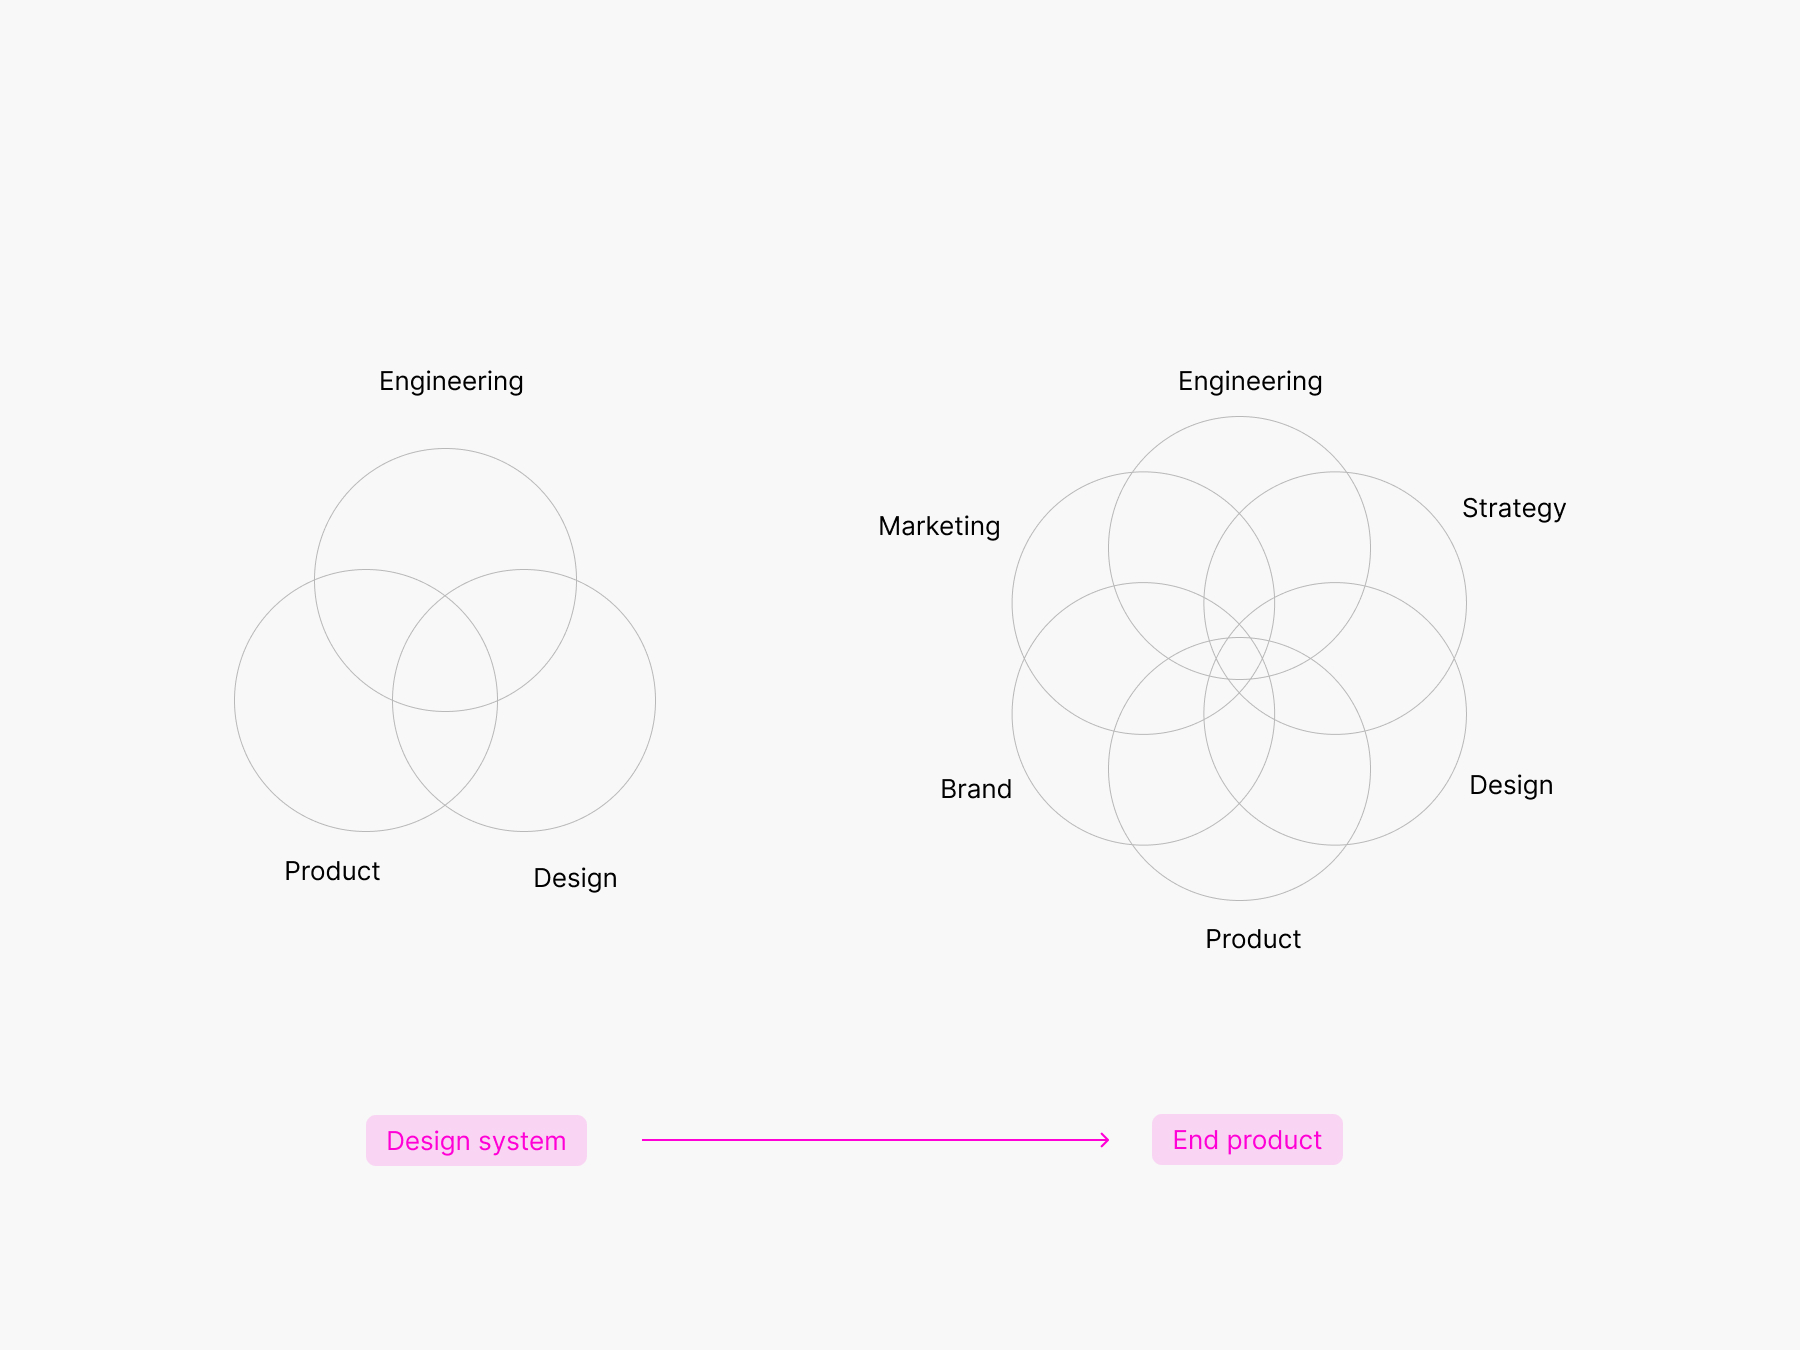 Design system venn diagram (3 circles) VS end product venn diagram (6 circles)